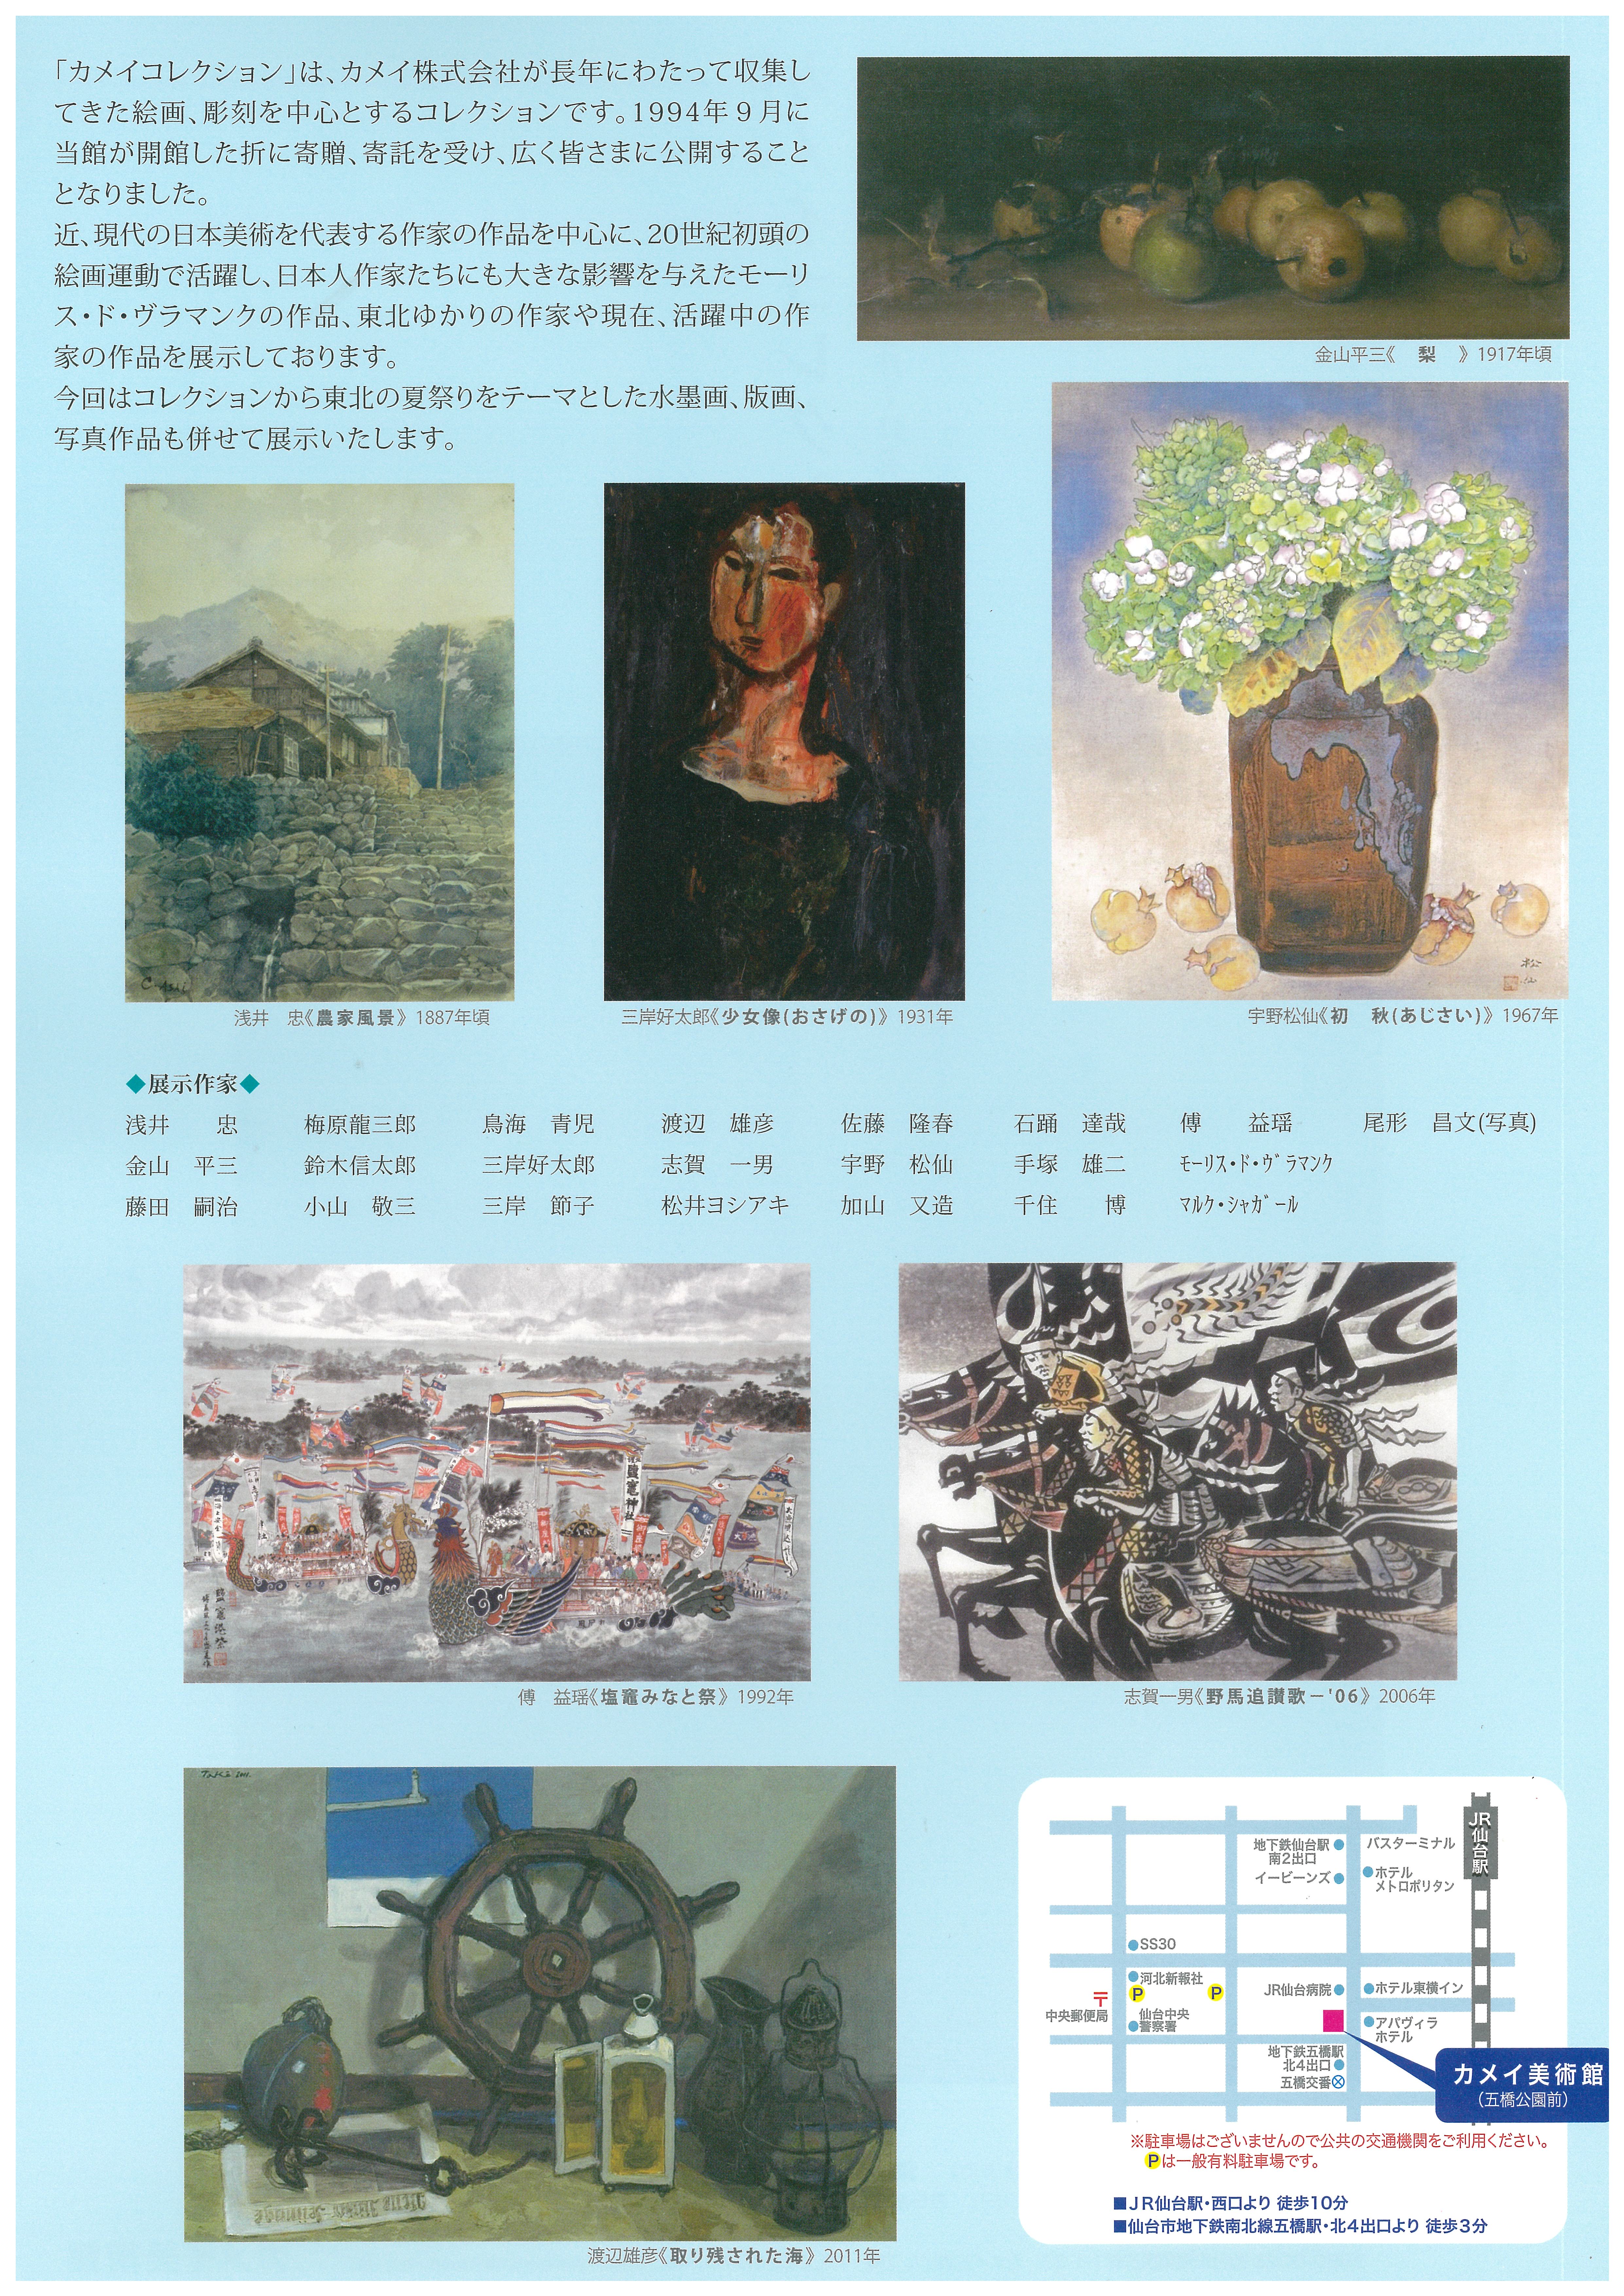 http://www.kameimuseum.or.jp/topics/2017/07/31/20170731140819-0001.jpg